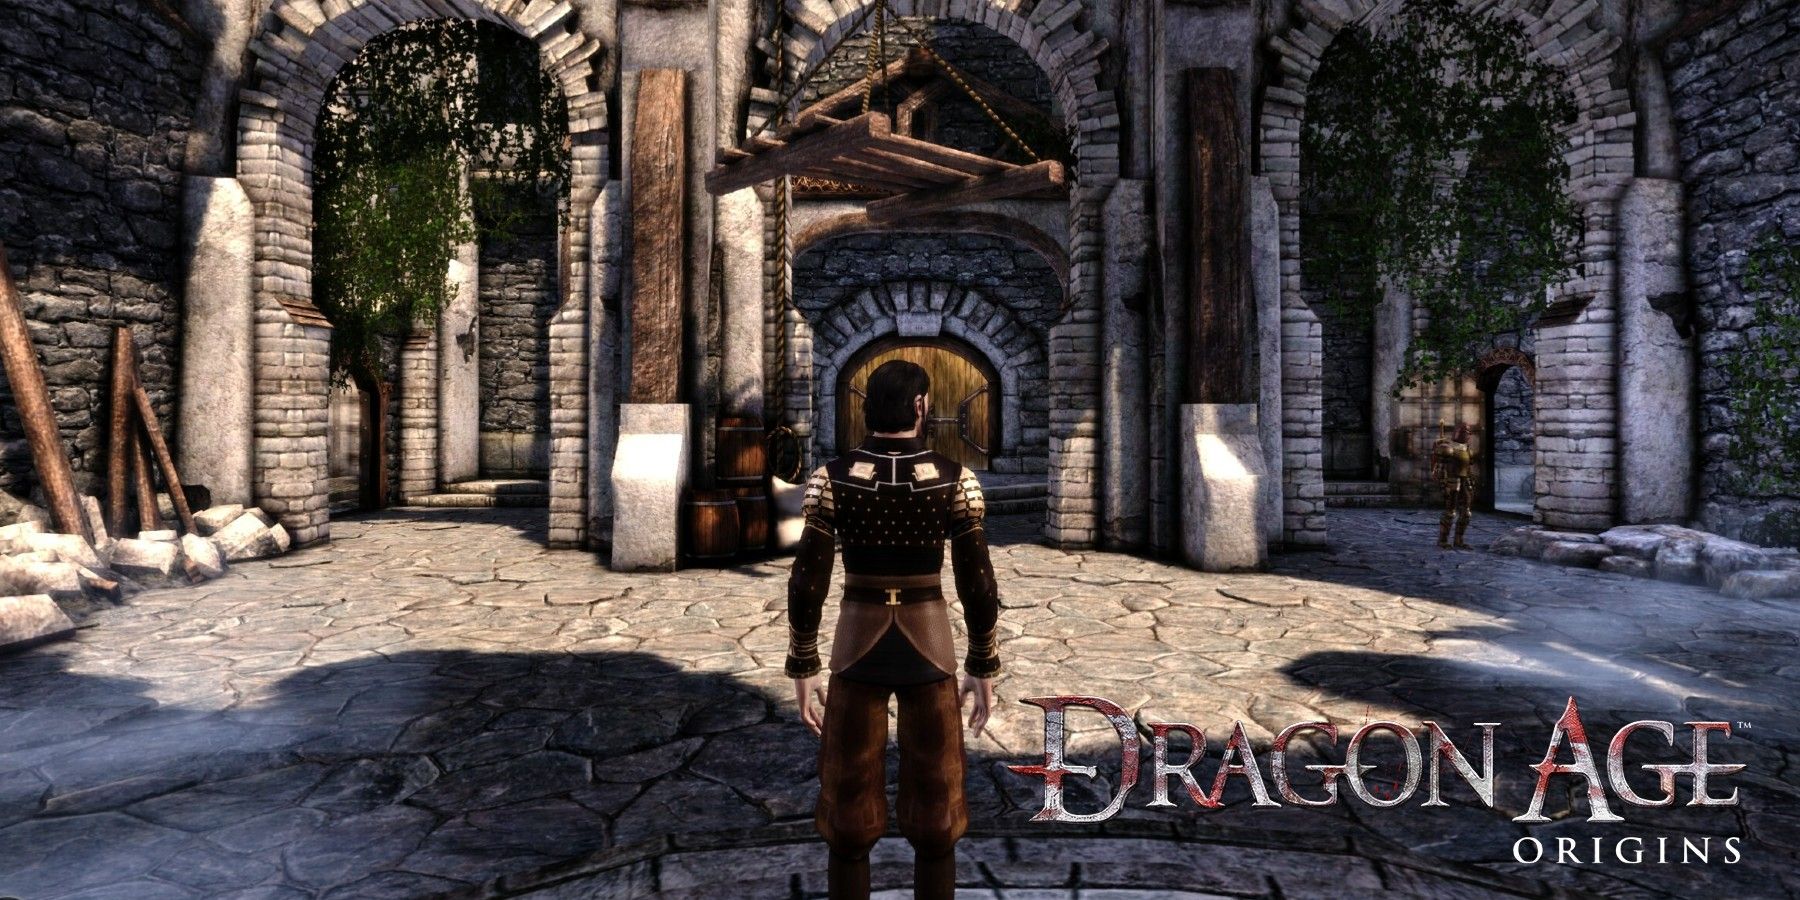 Dragon Age: Origins Review 